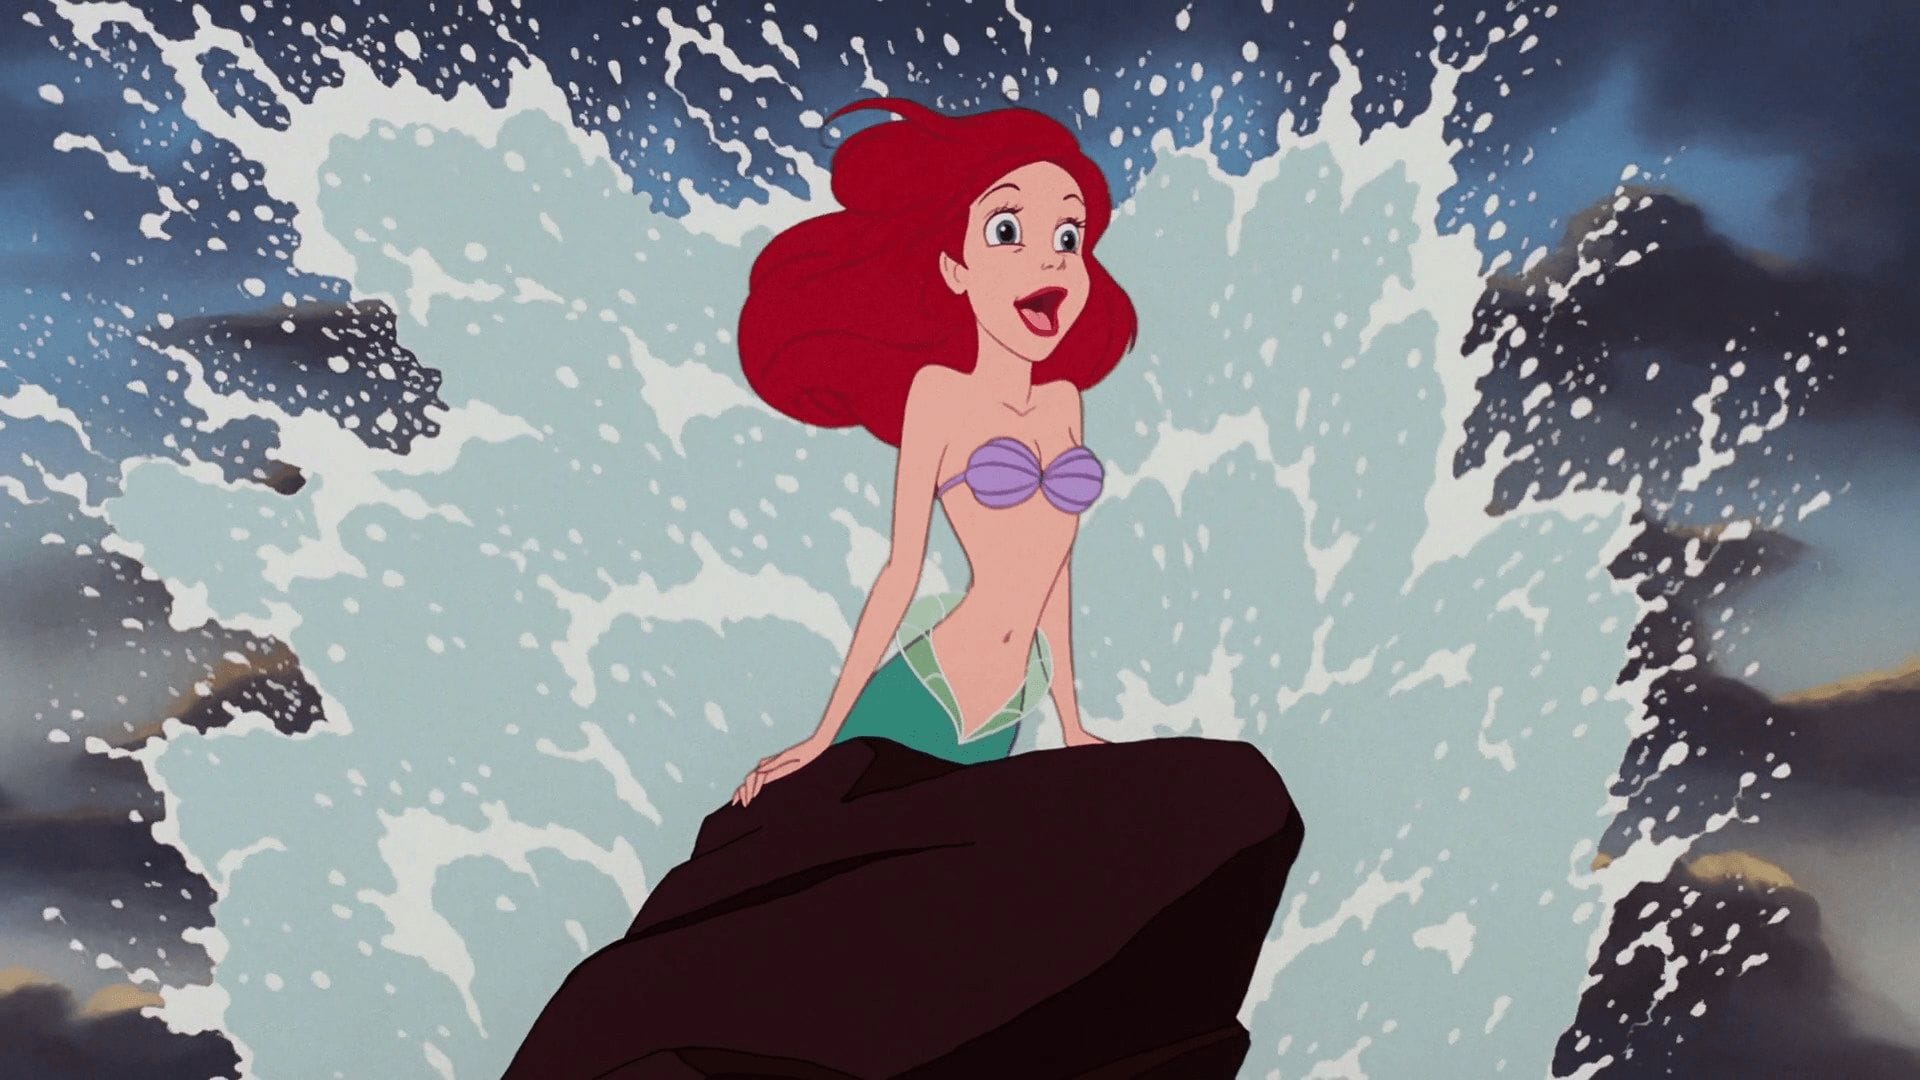 5 Disney Princess Movies That Changed Animation